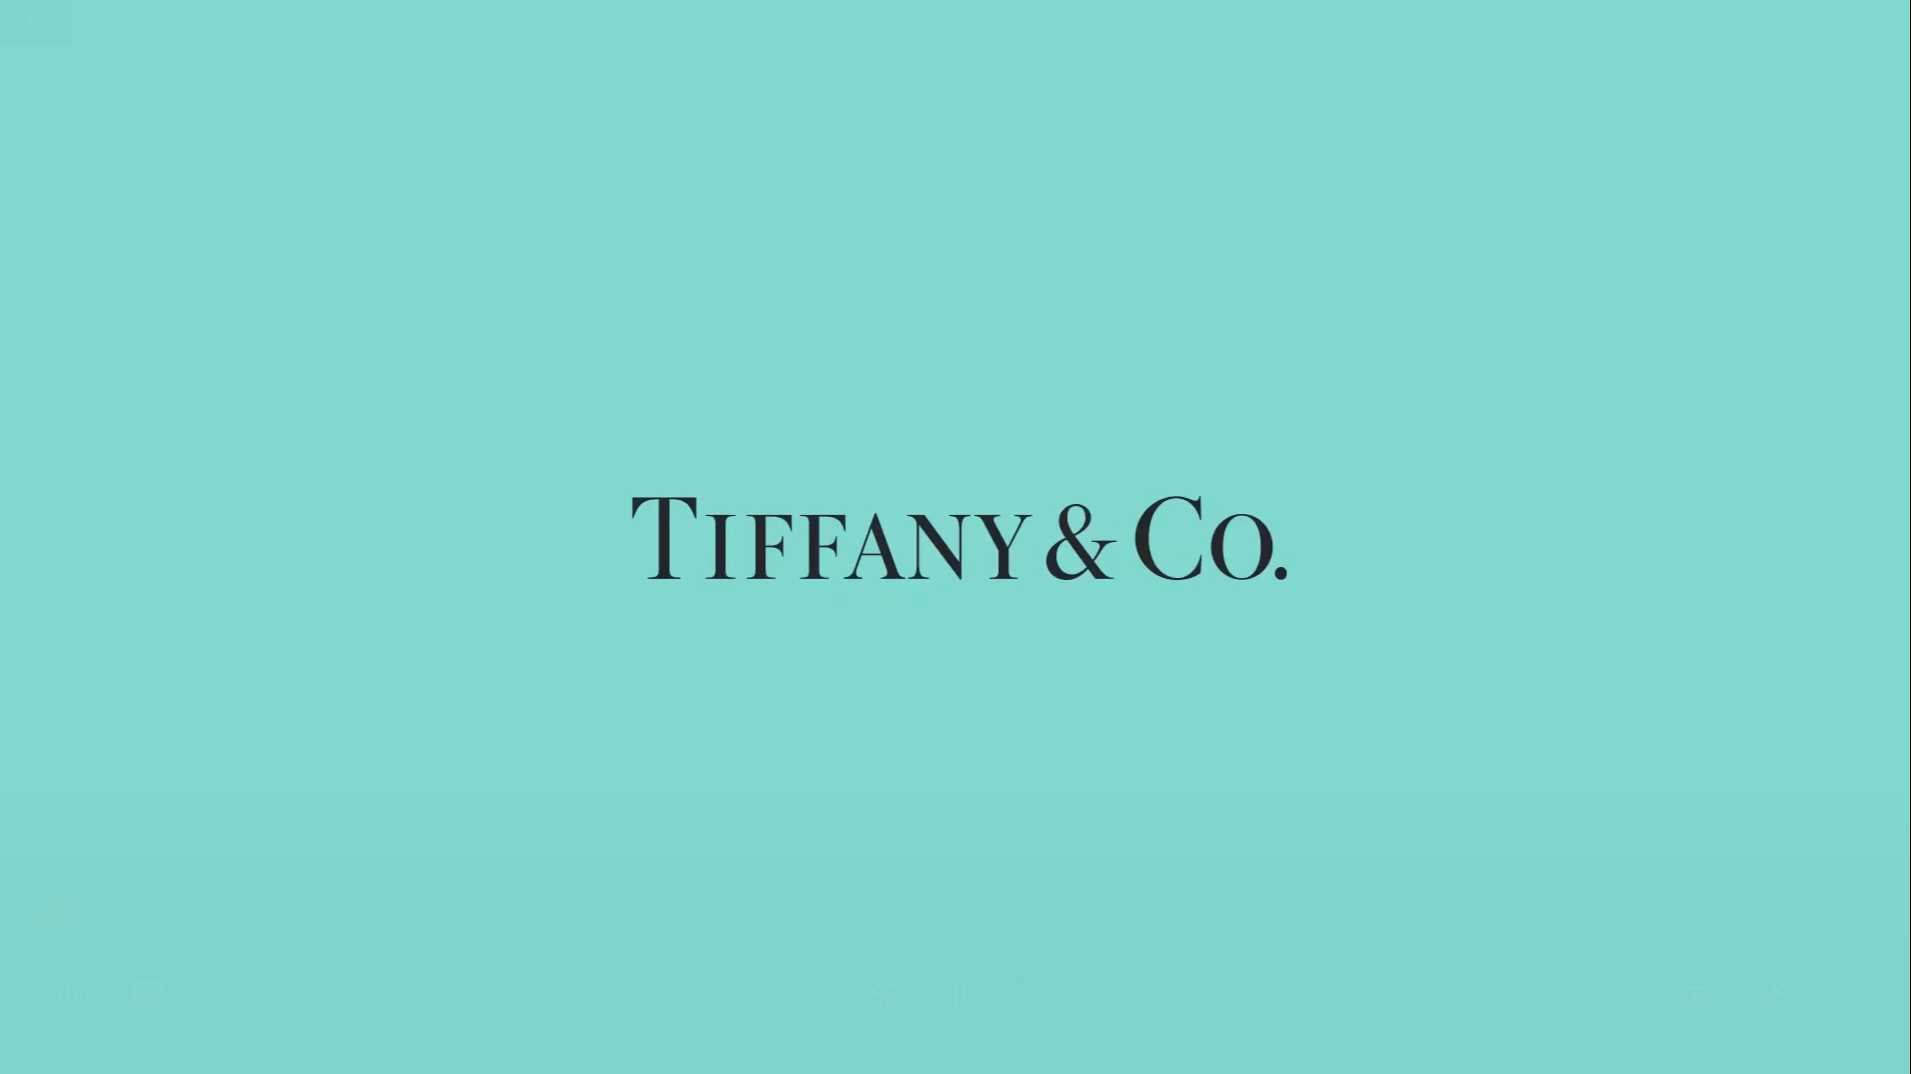 Tiffany & Co.《地标建筑》